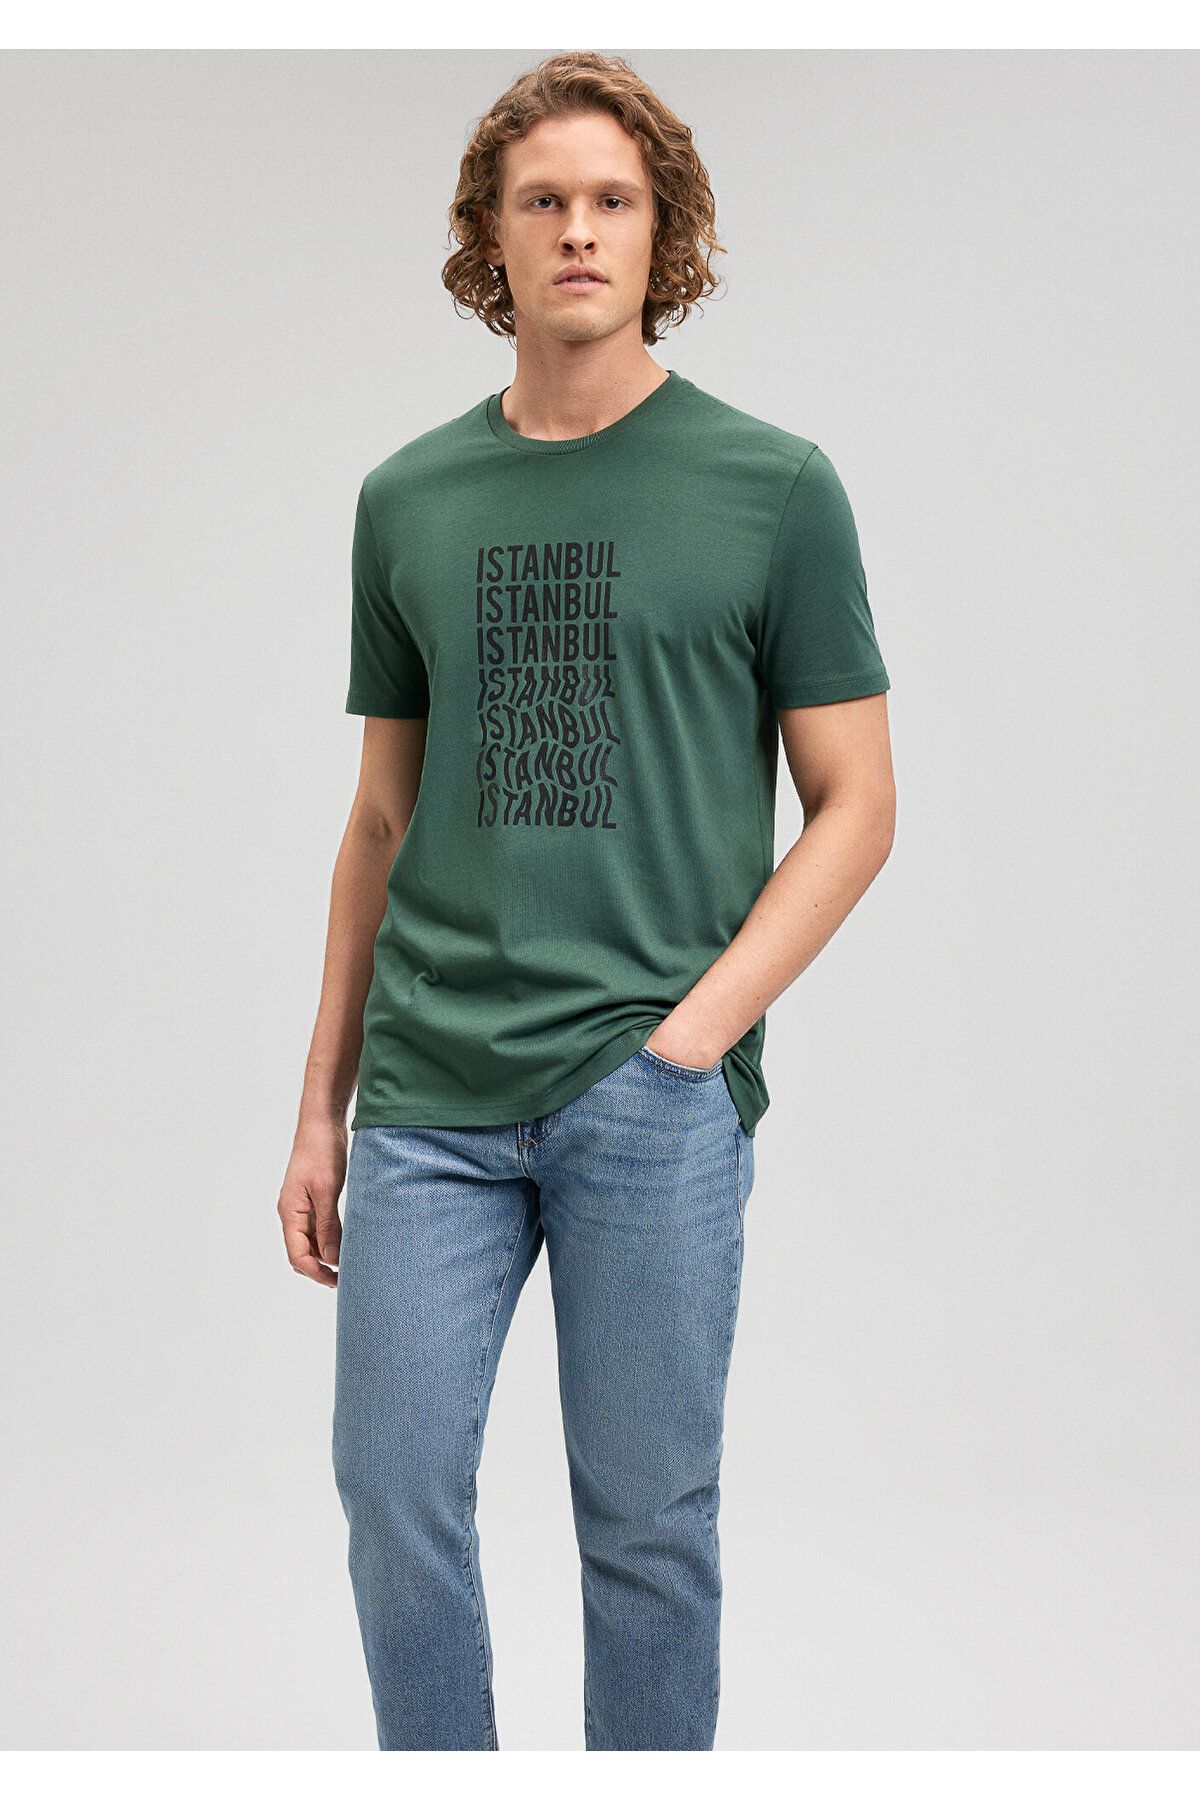 Mavi تی شرت سبز چاپ شده استانبول 0612275-71580